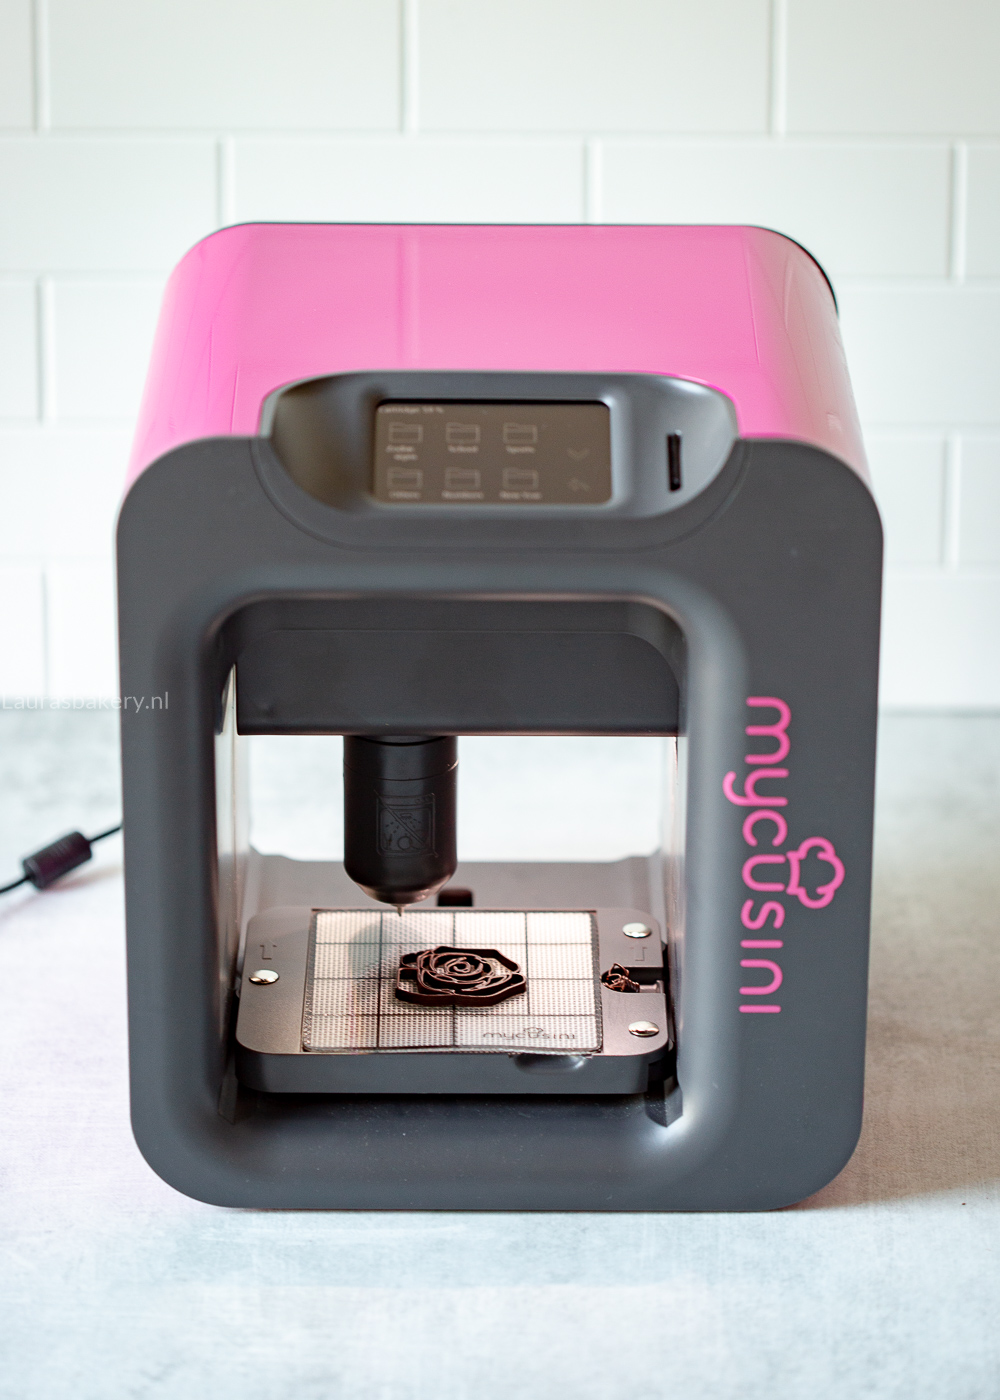 MyCusini 3D chocoladeprinter review 2.0